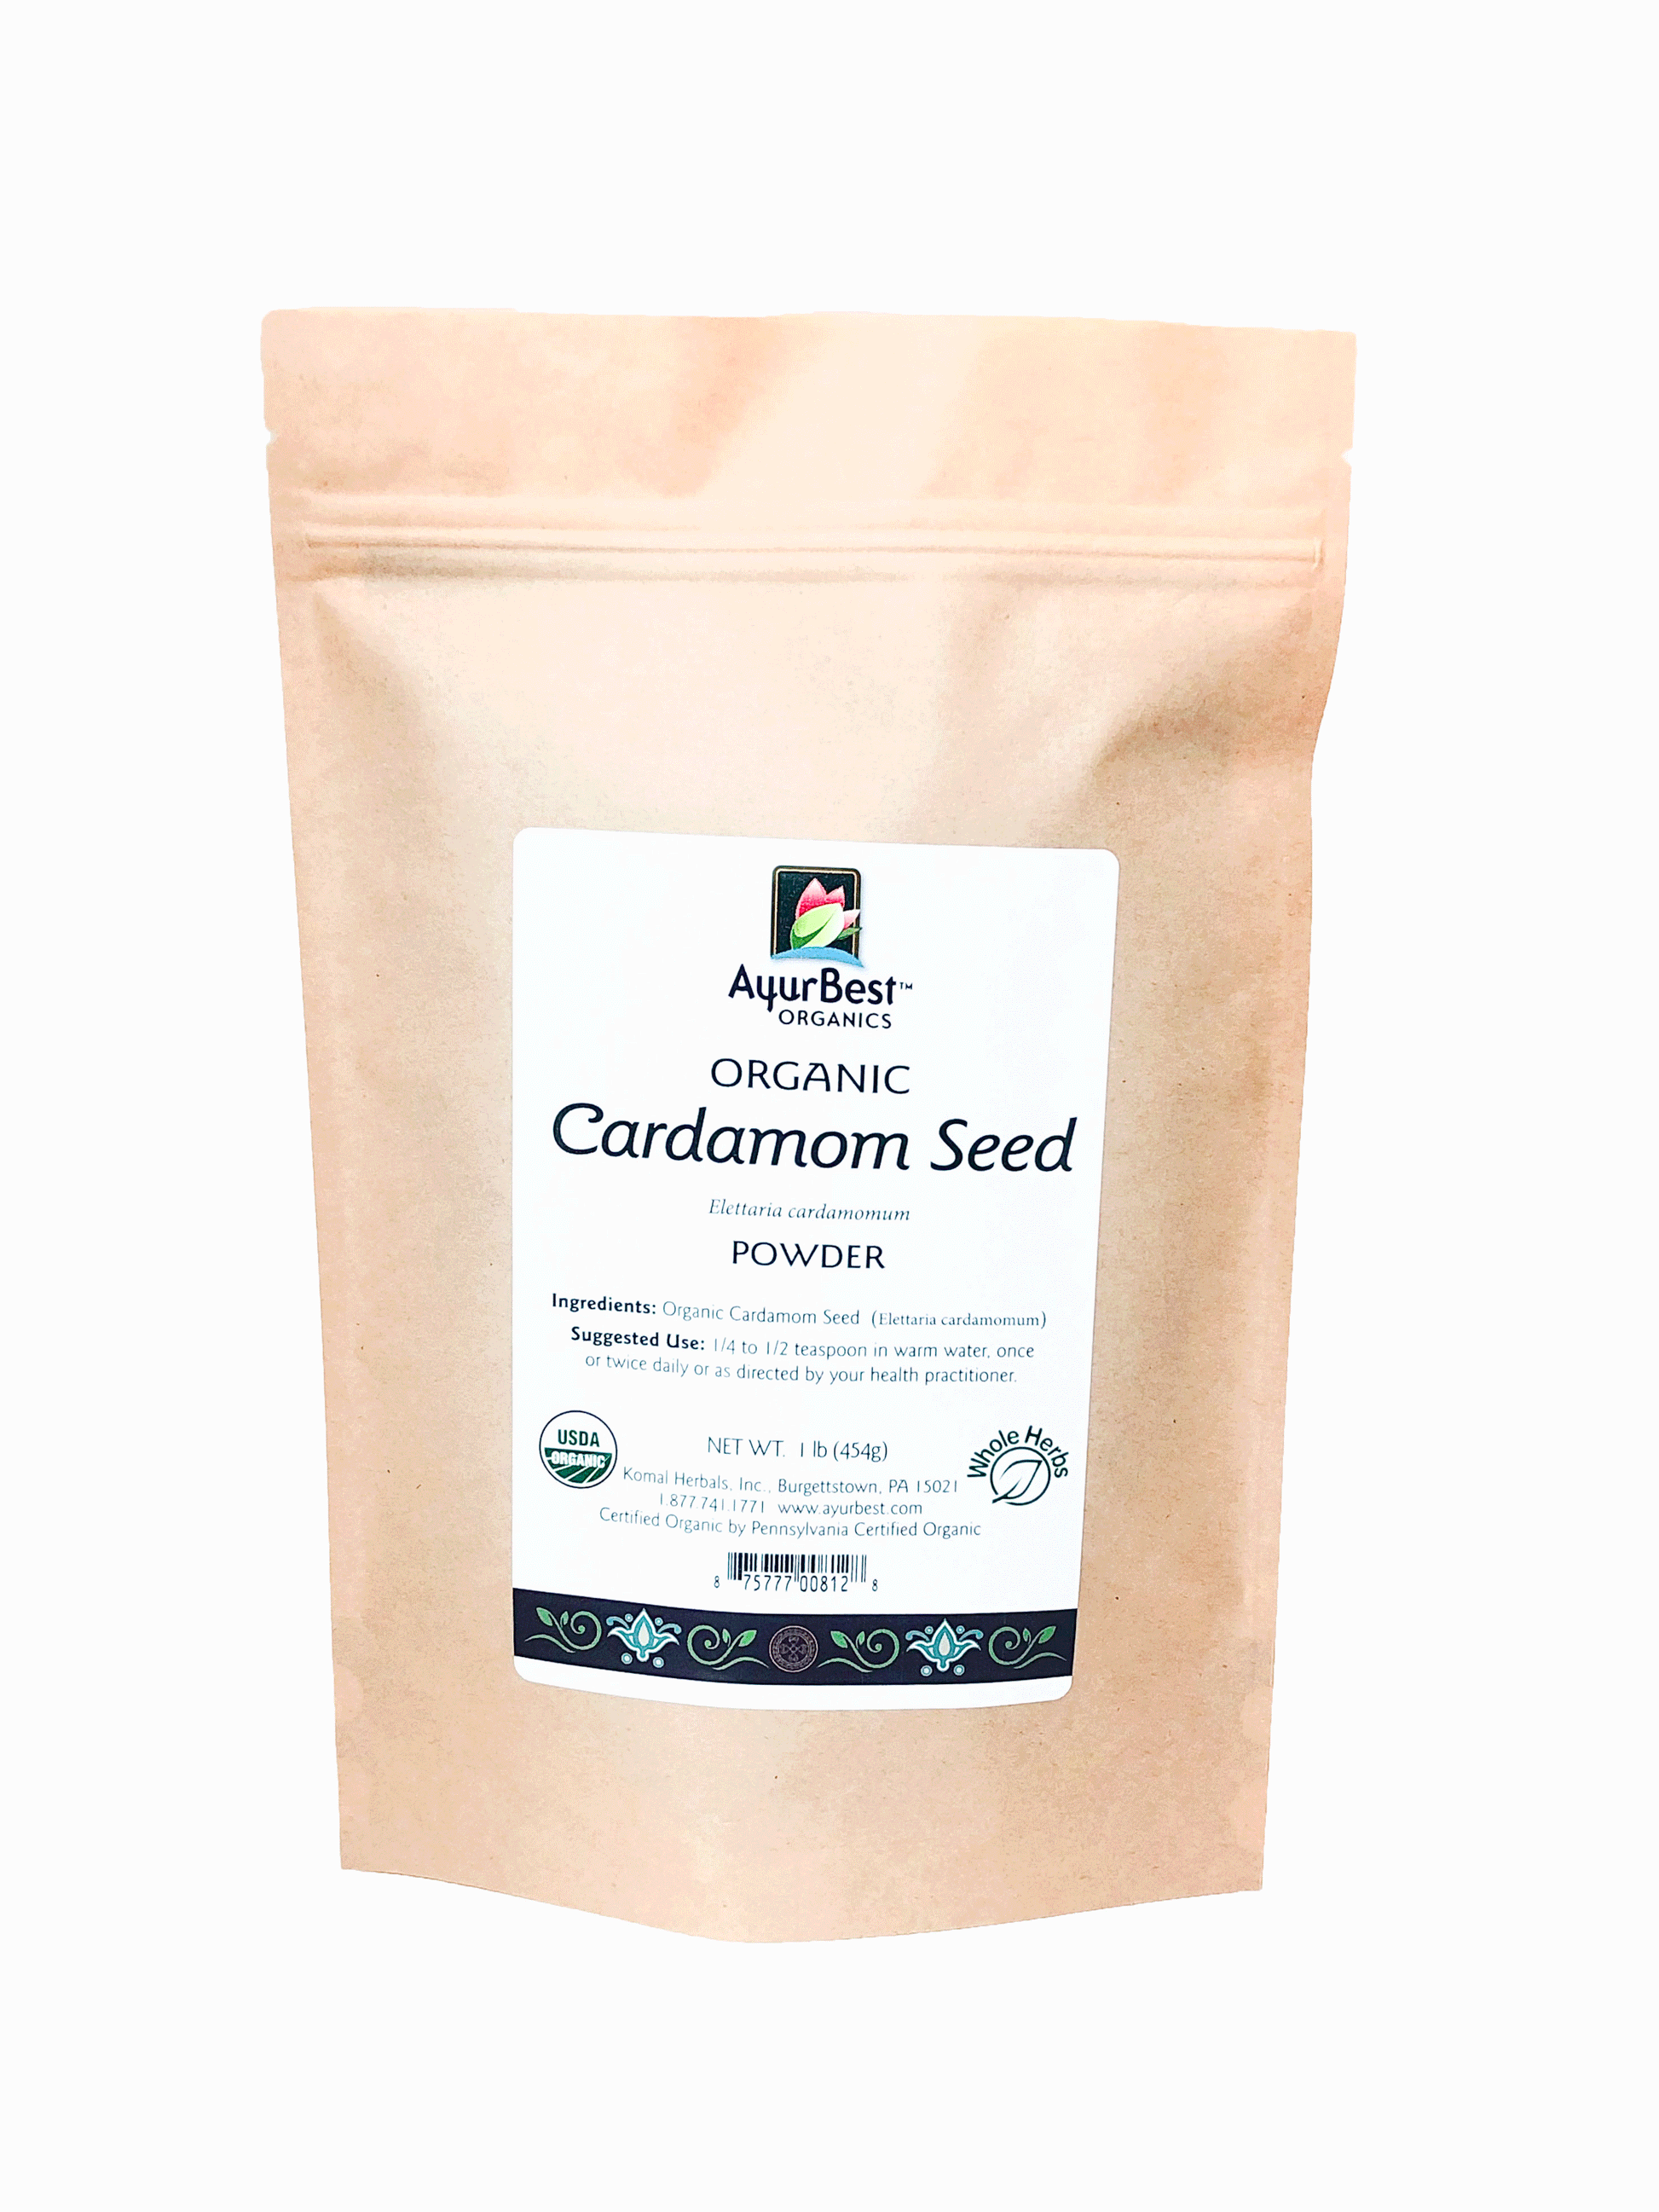 Buy Organic Cardamom Seed Powder in 1lb Bulk Bags.